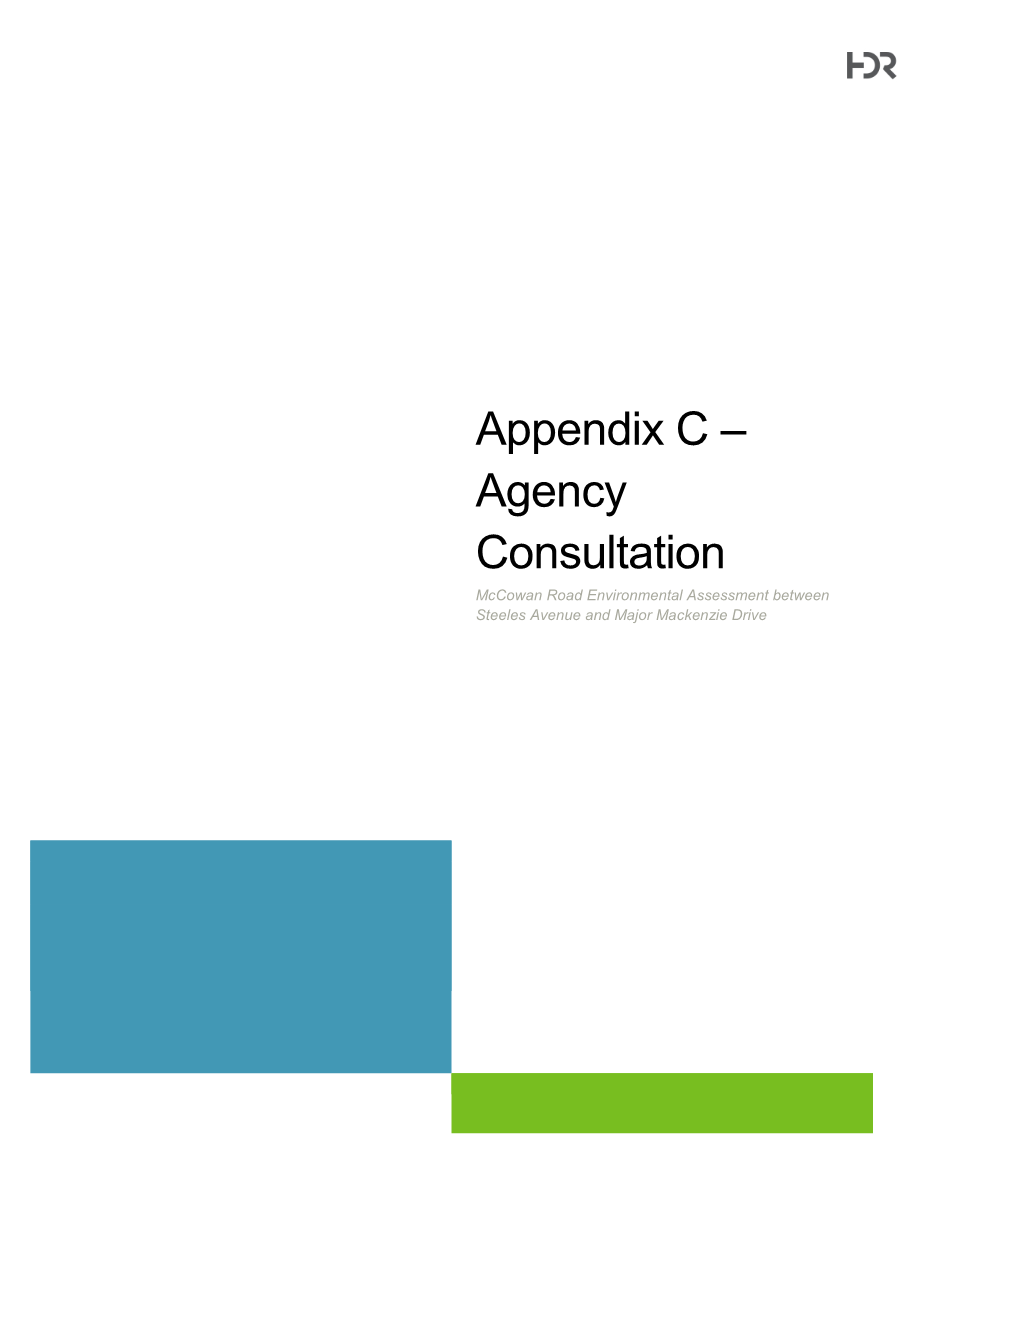 Appendix C Agency Consultation